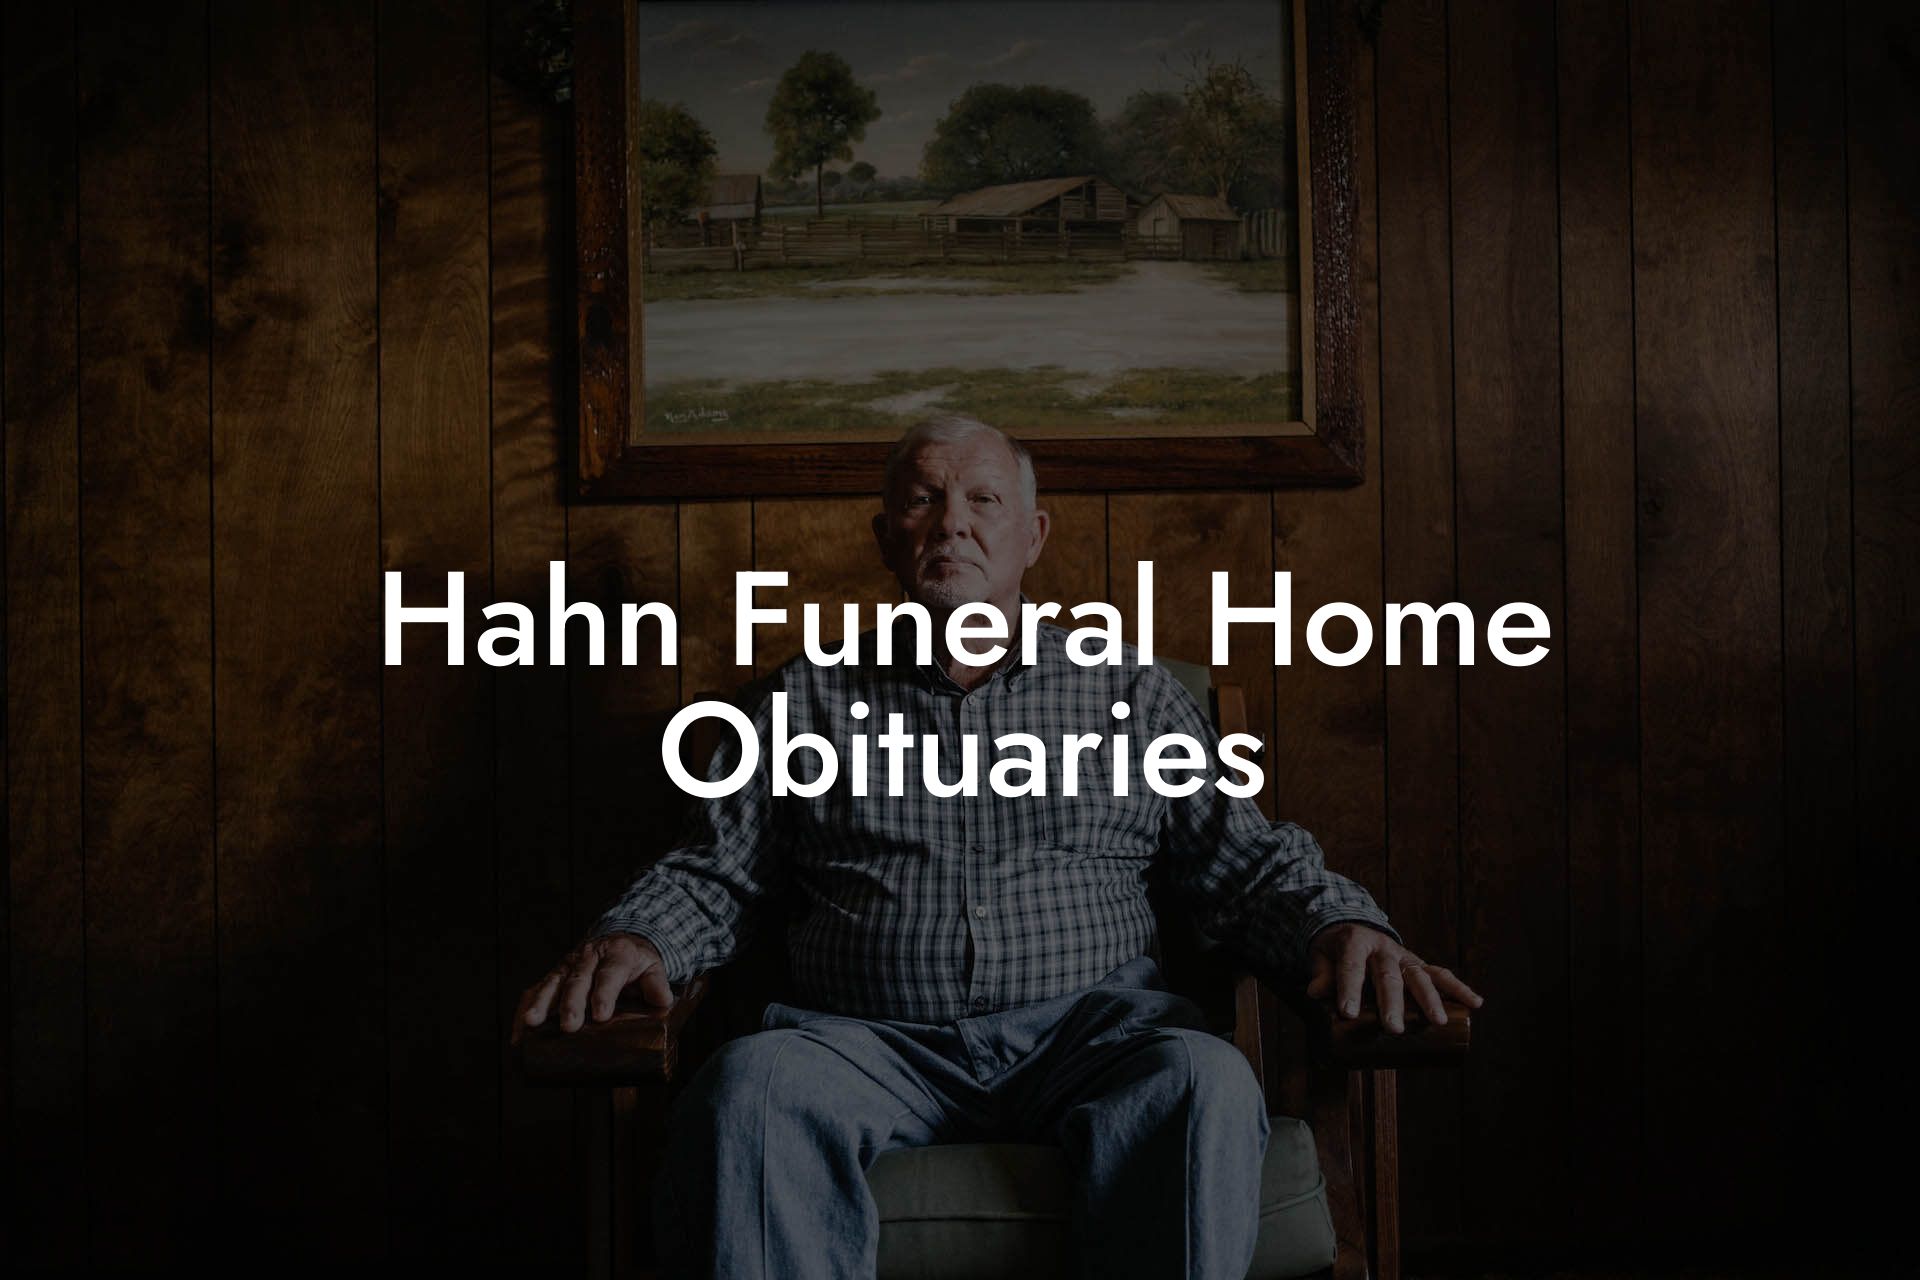 Hahn Funeral Home Obituaries